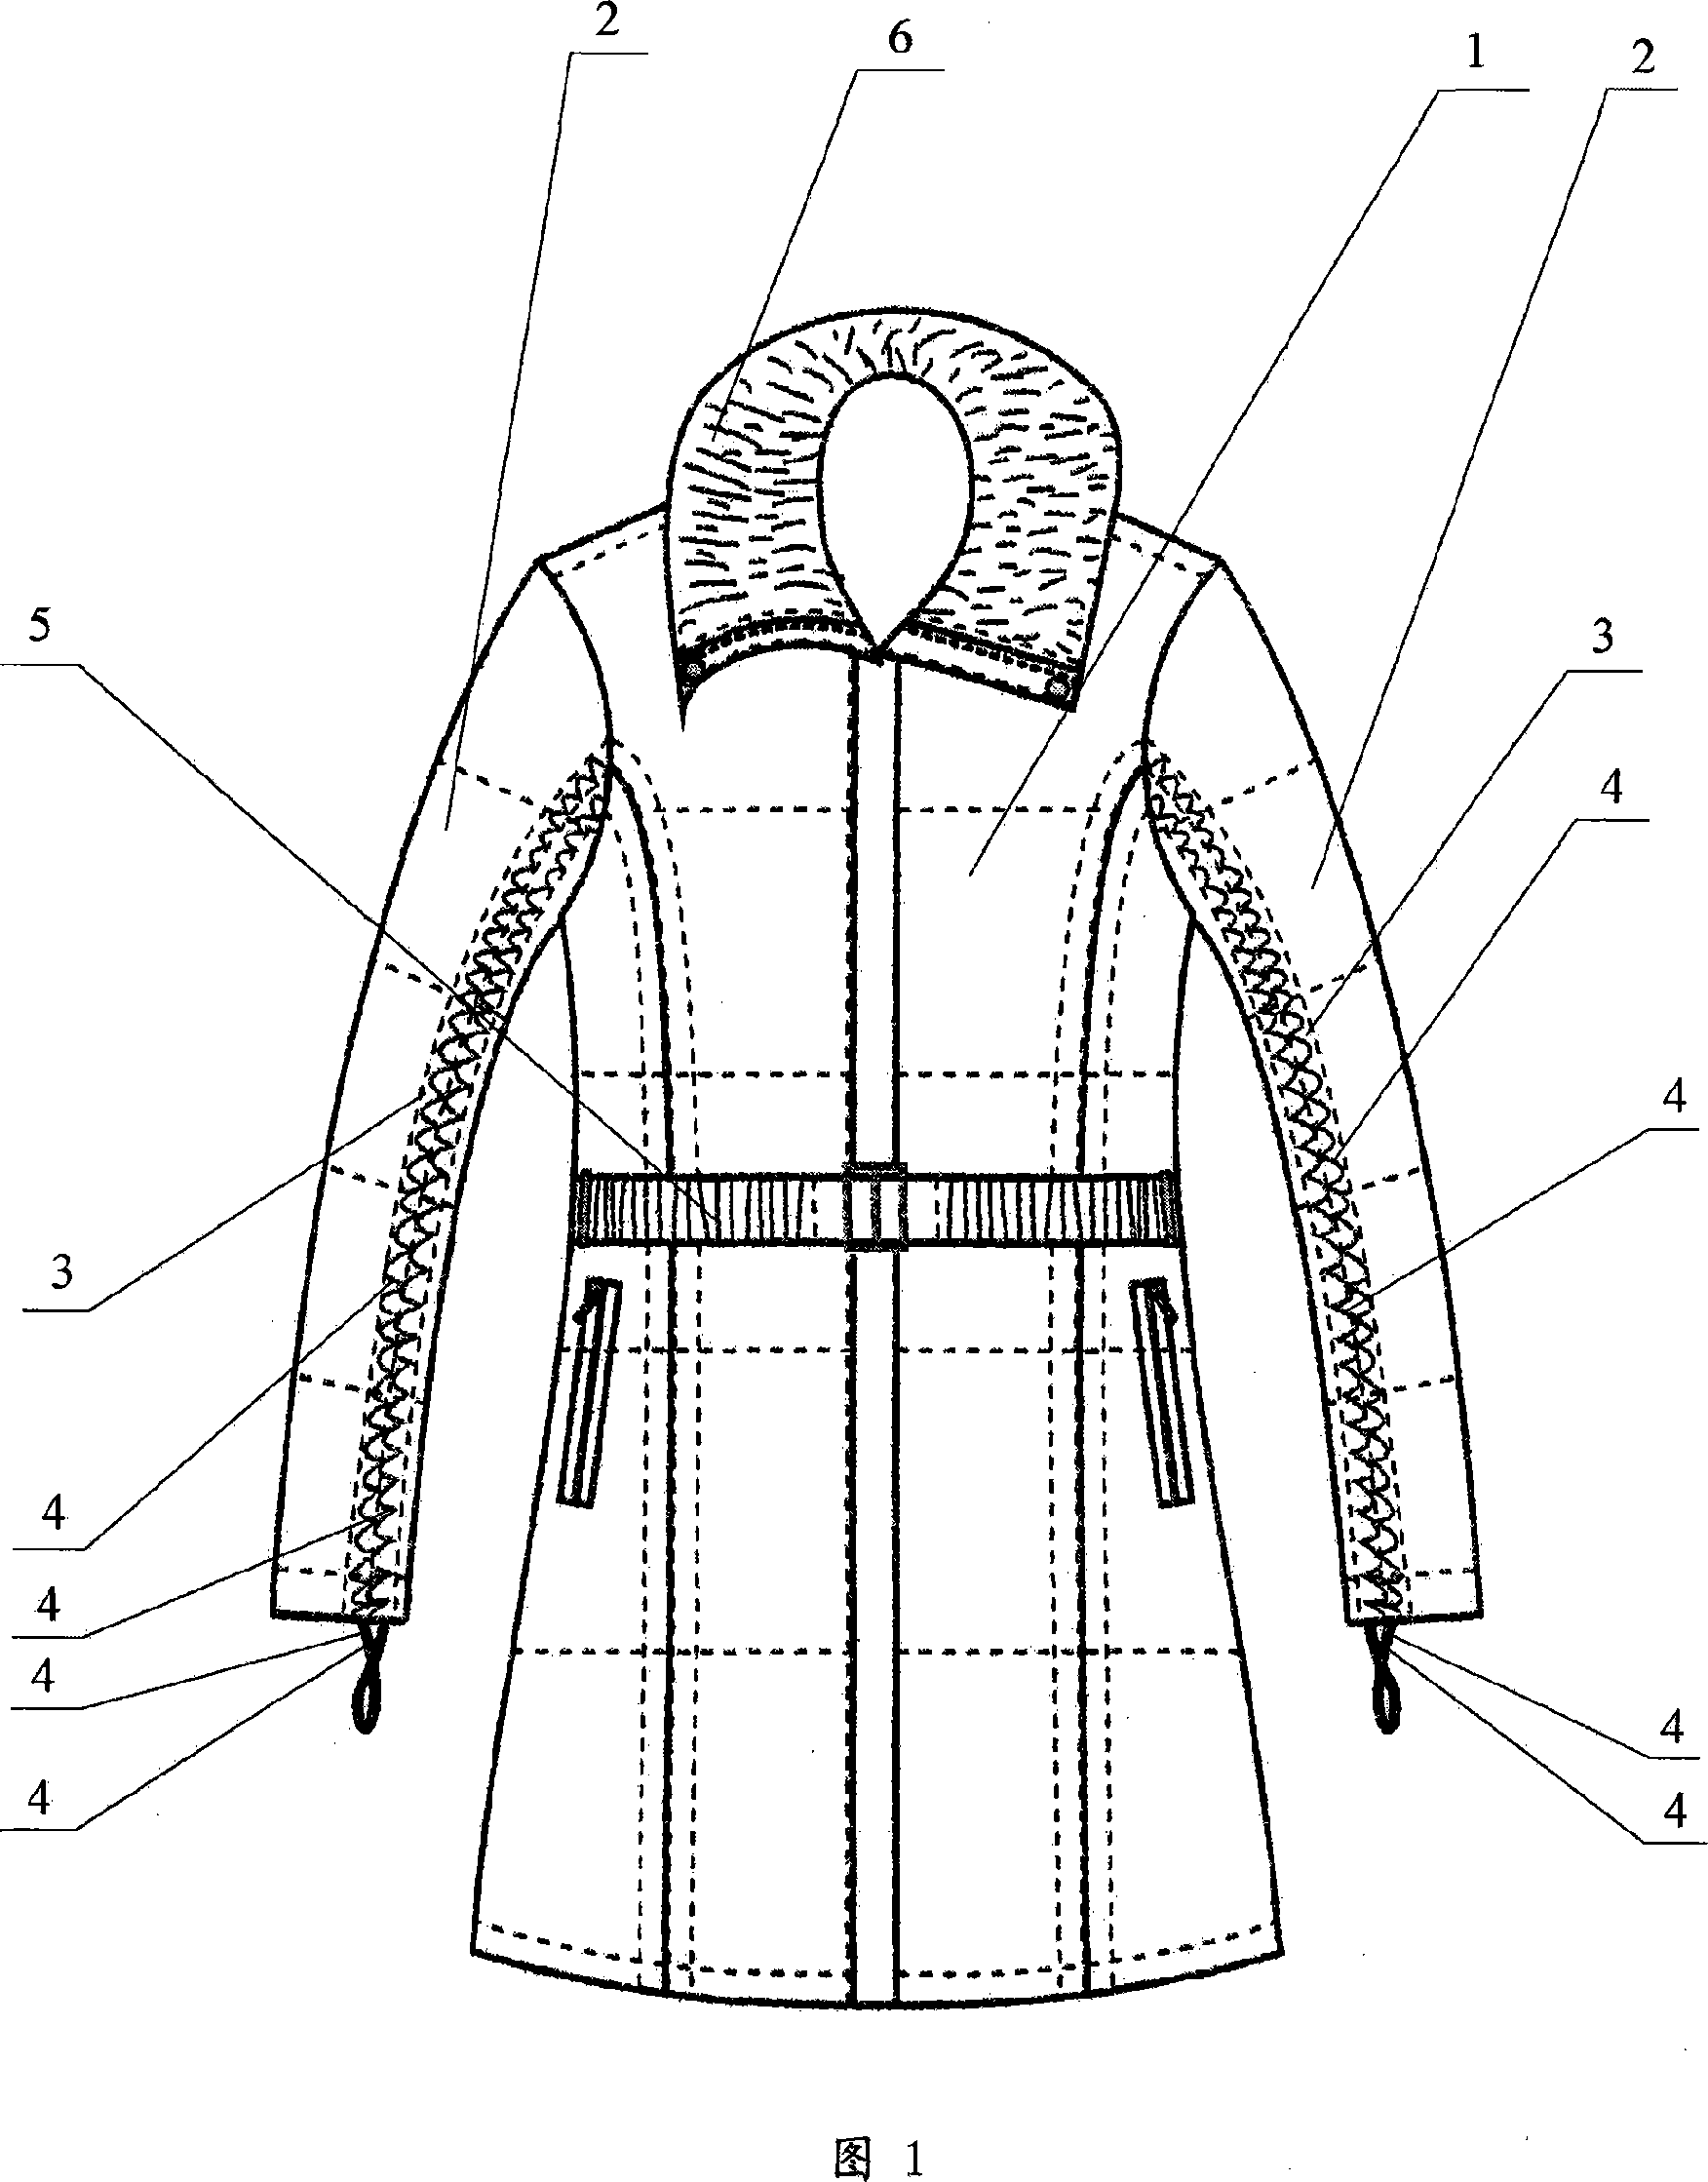 Jacket with elastic sleeves